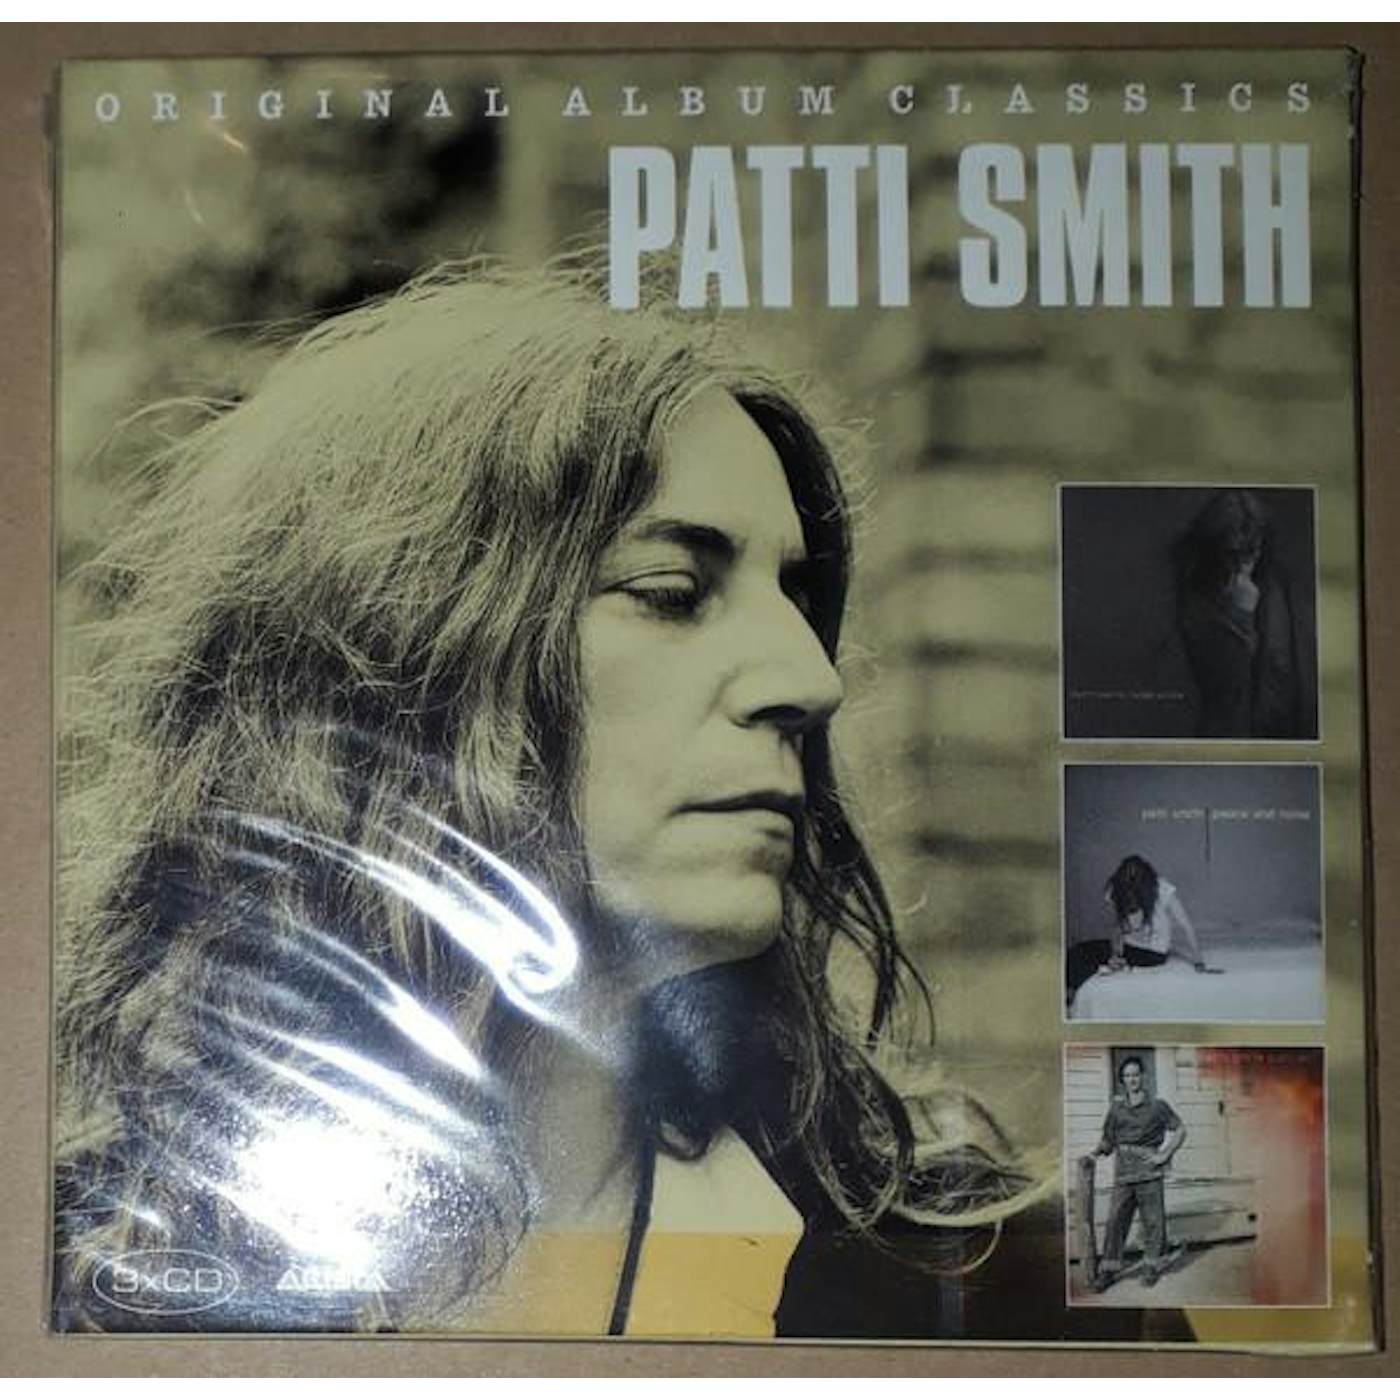 Patti Smith ORIGINAL ALBUM CLASSICS CD